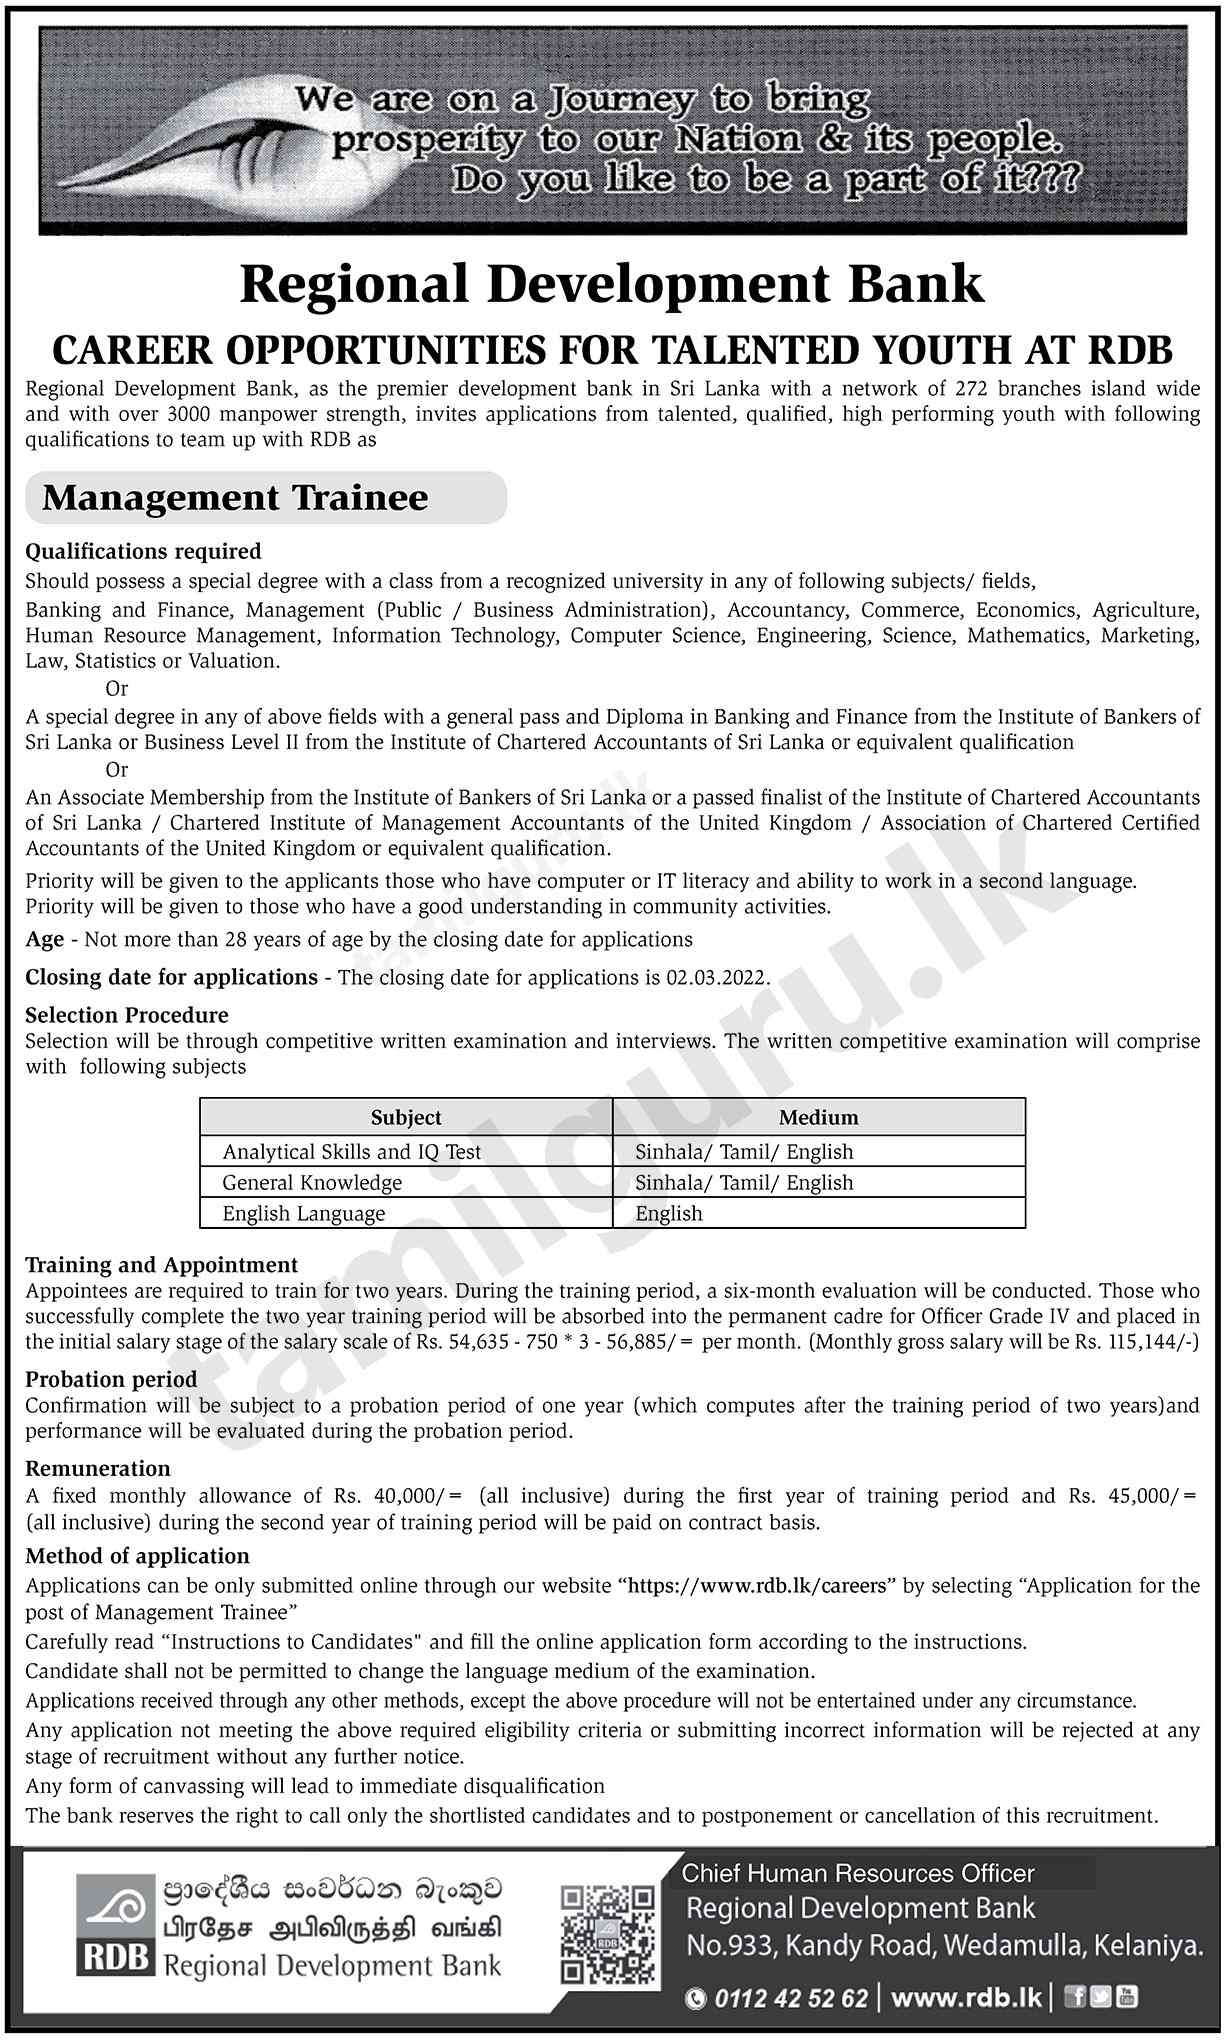 Regional Development Bank (RDB) Management Trainee Vacancies 2022 - Notice in English